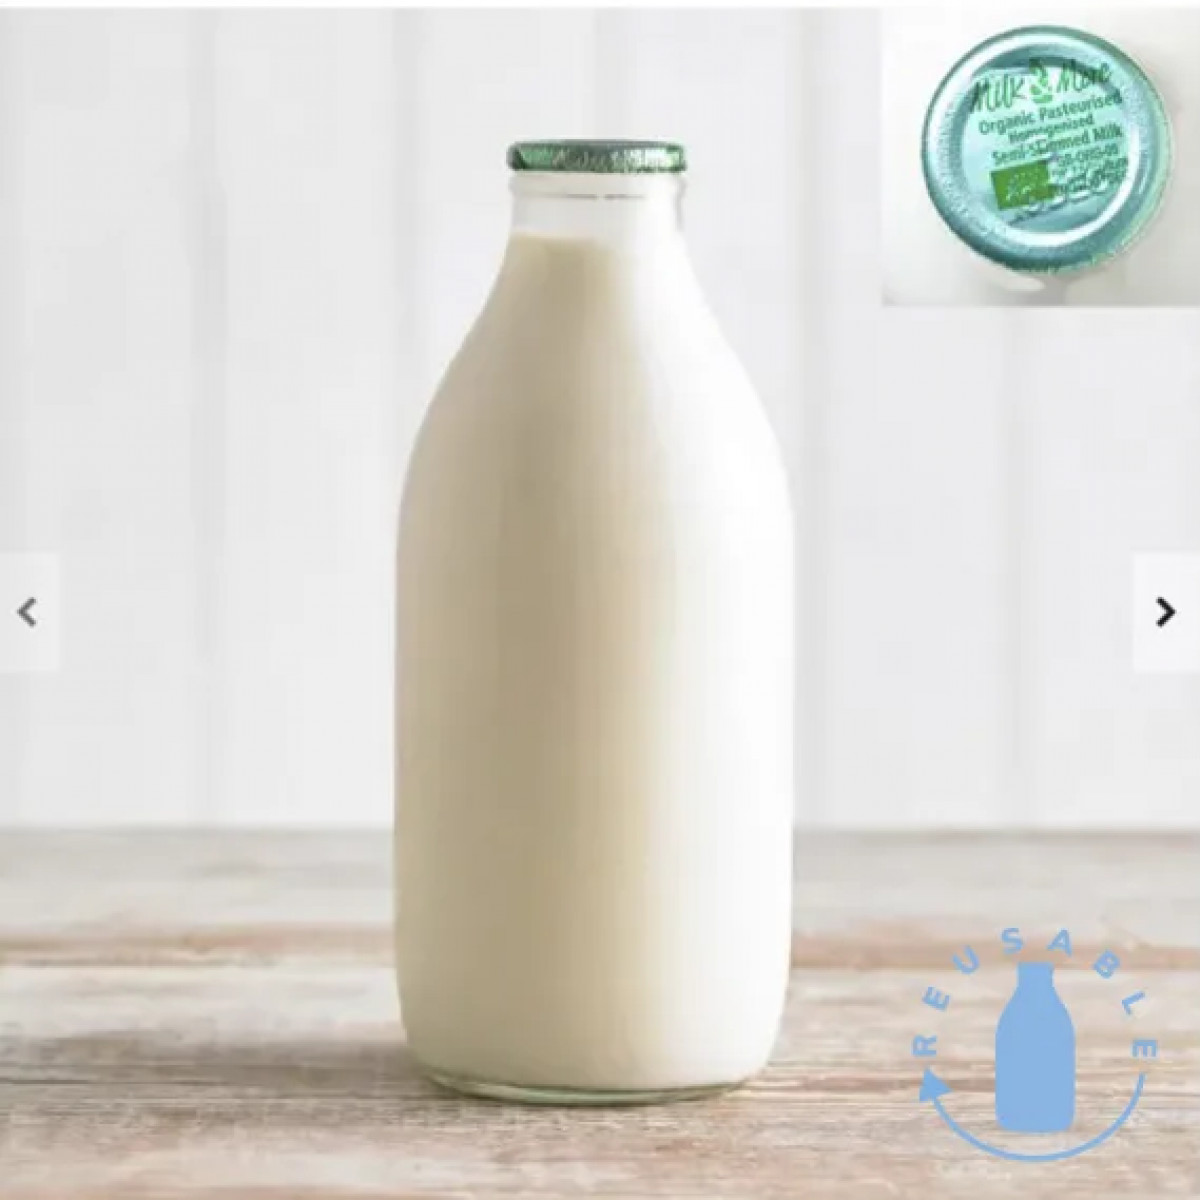 Product picture for Cornish semi skimmed milk - glass bottle